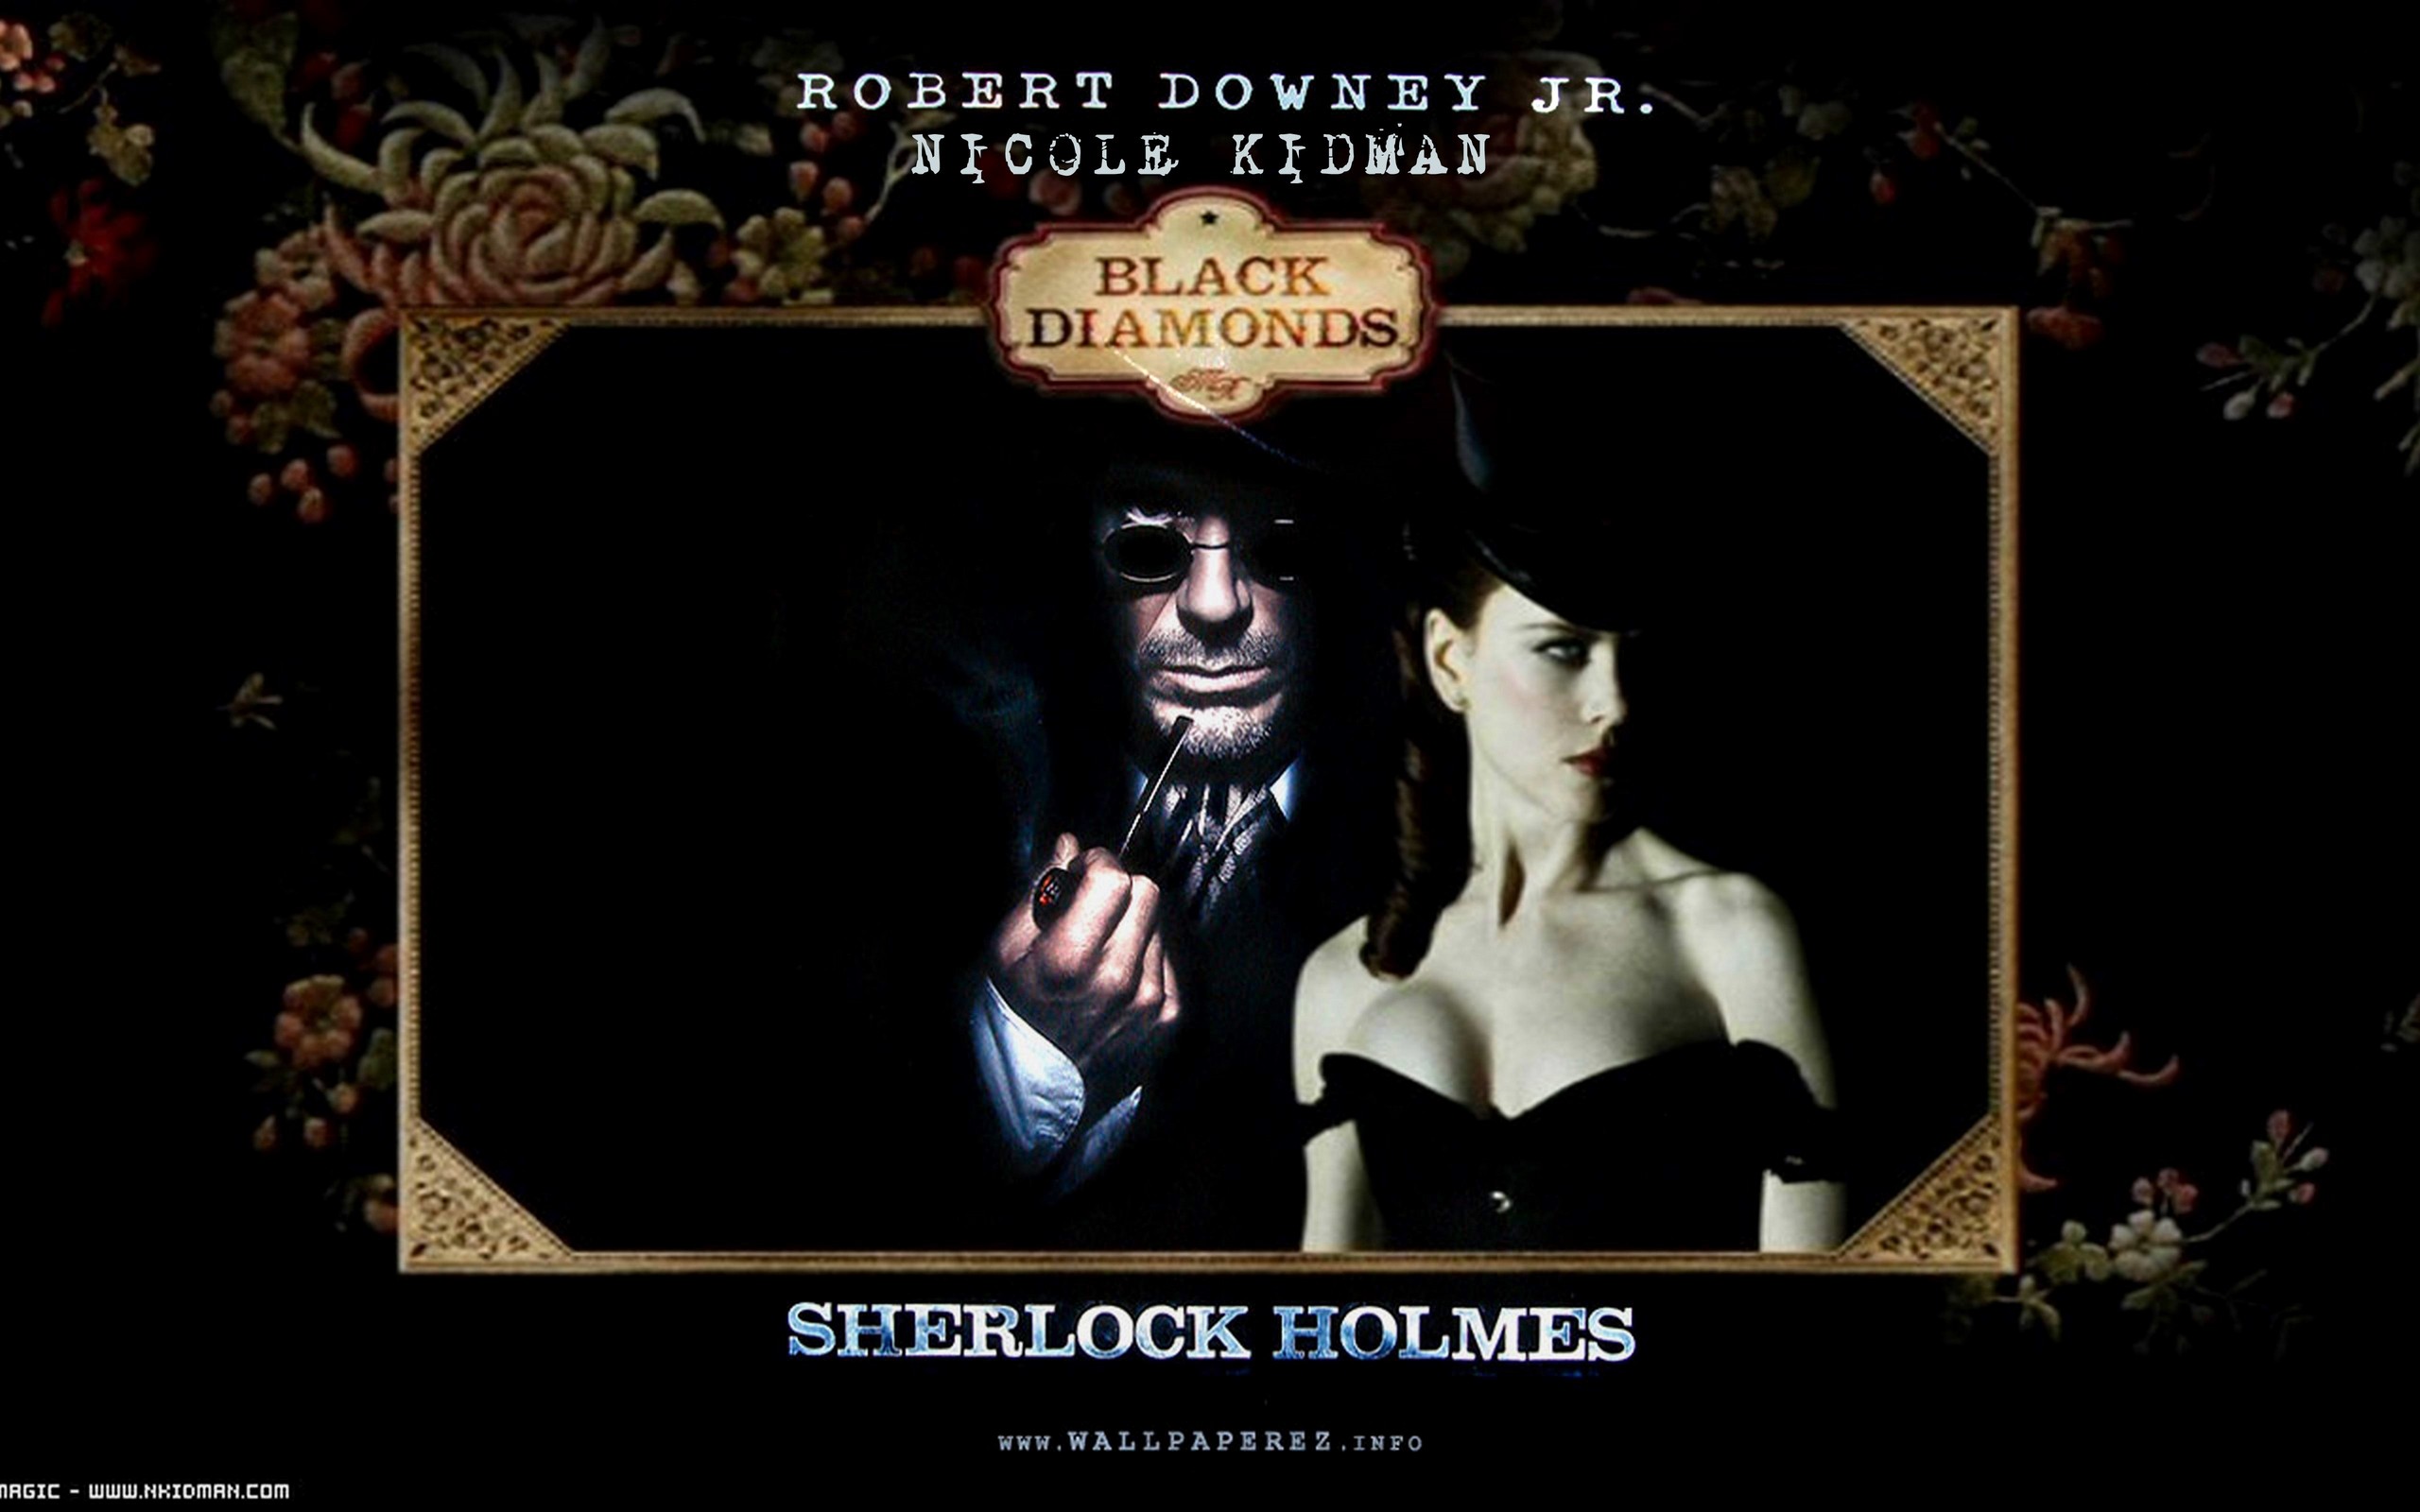 Robert Downey Jr As Sherlock Holmes Image